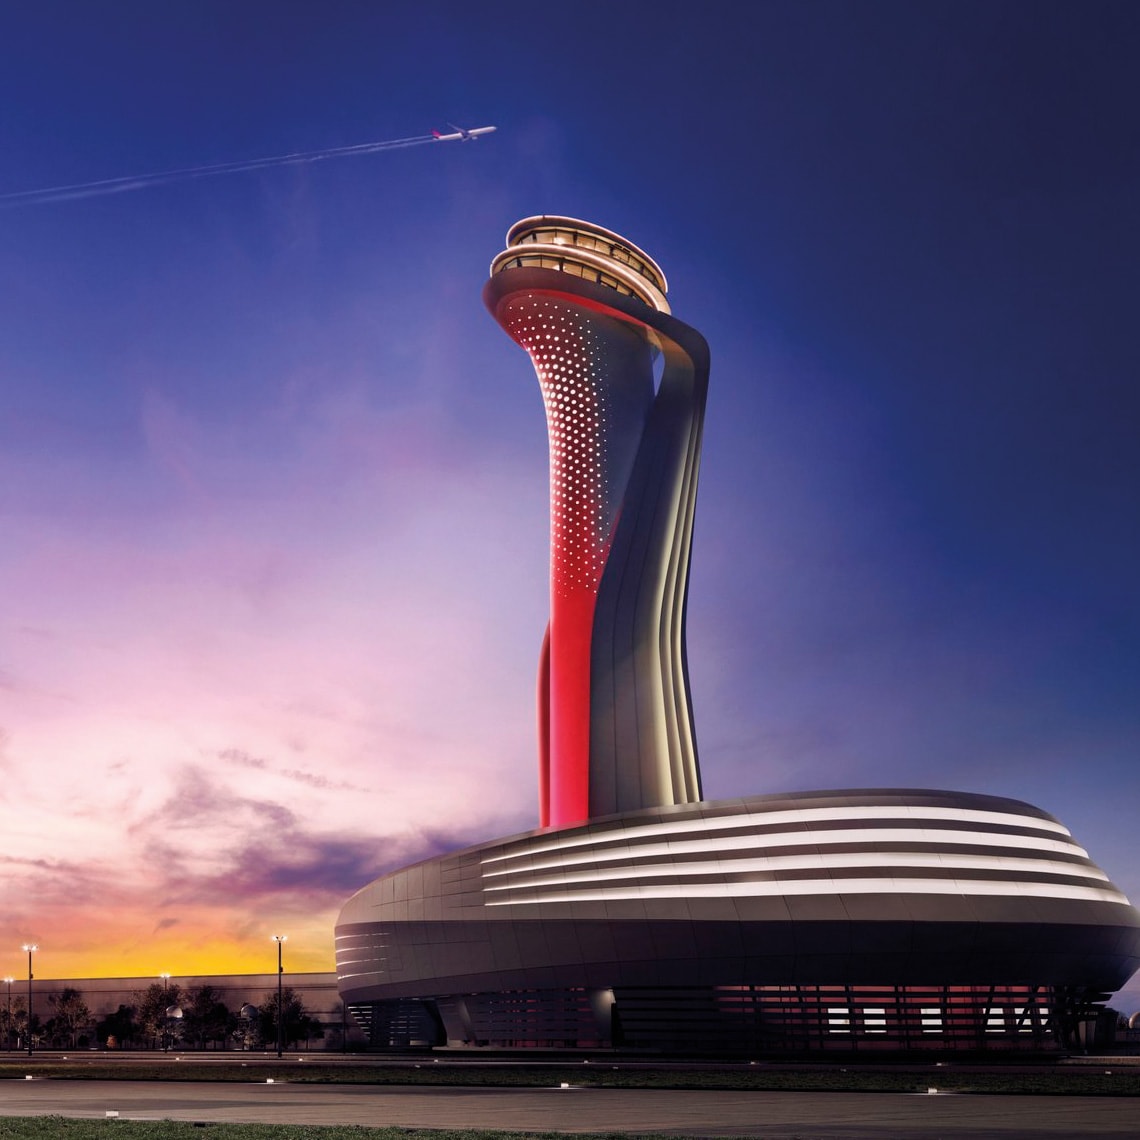 İstanbul Atatürk Airport Transfer